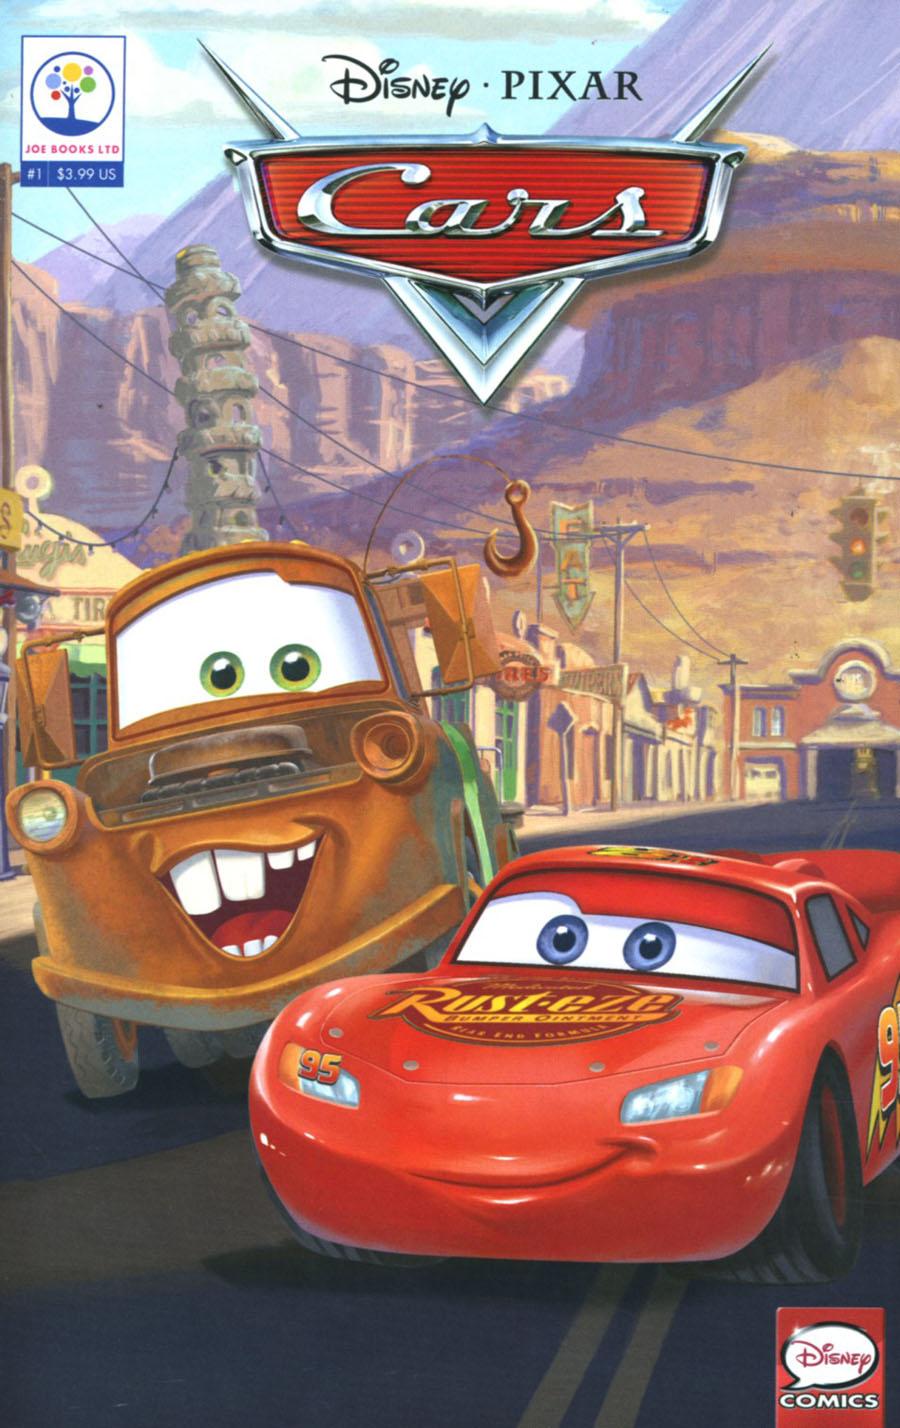 Disney Pixar Cars Vol. 1 #1